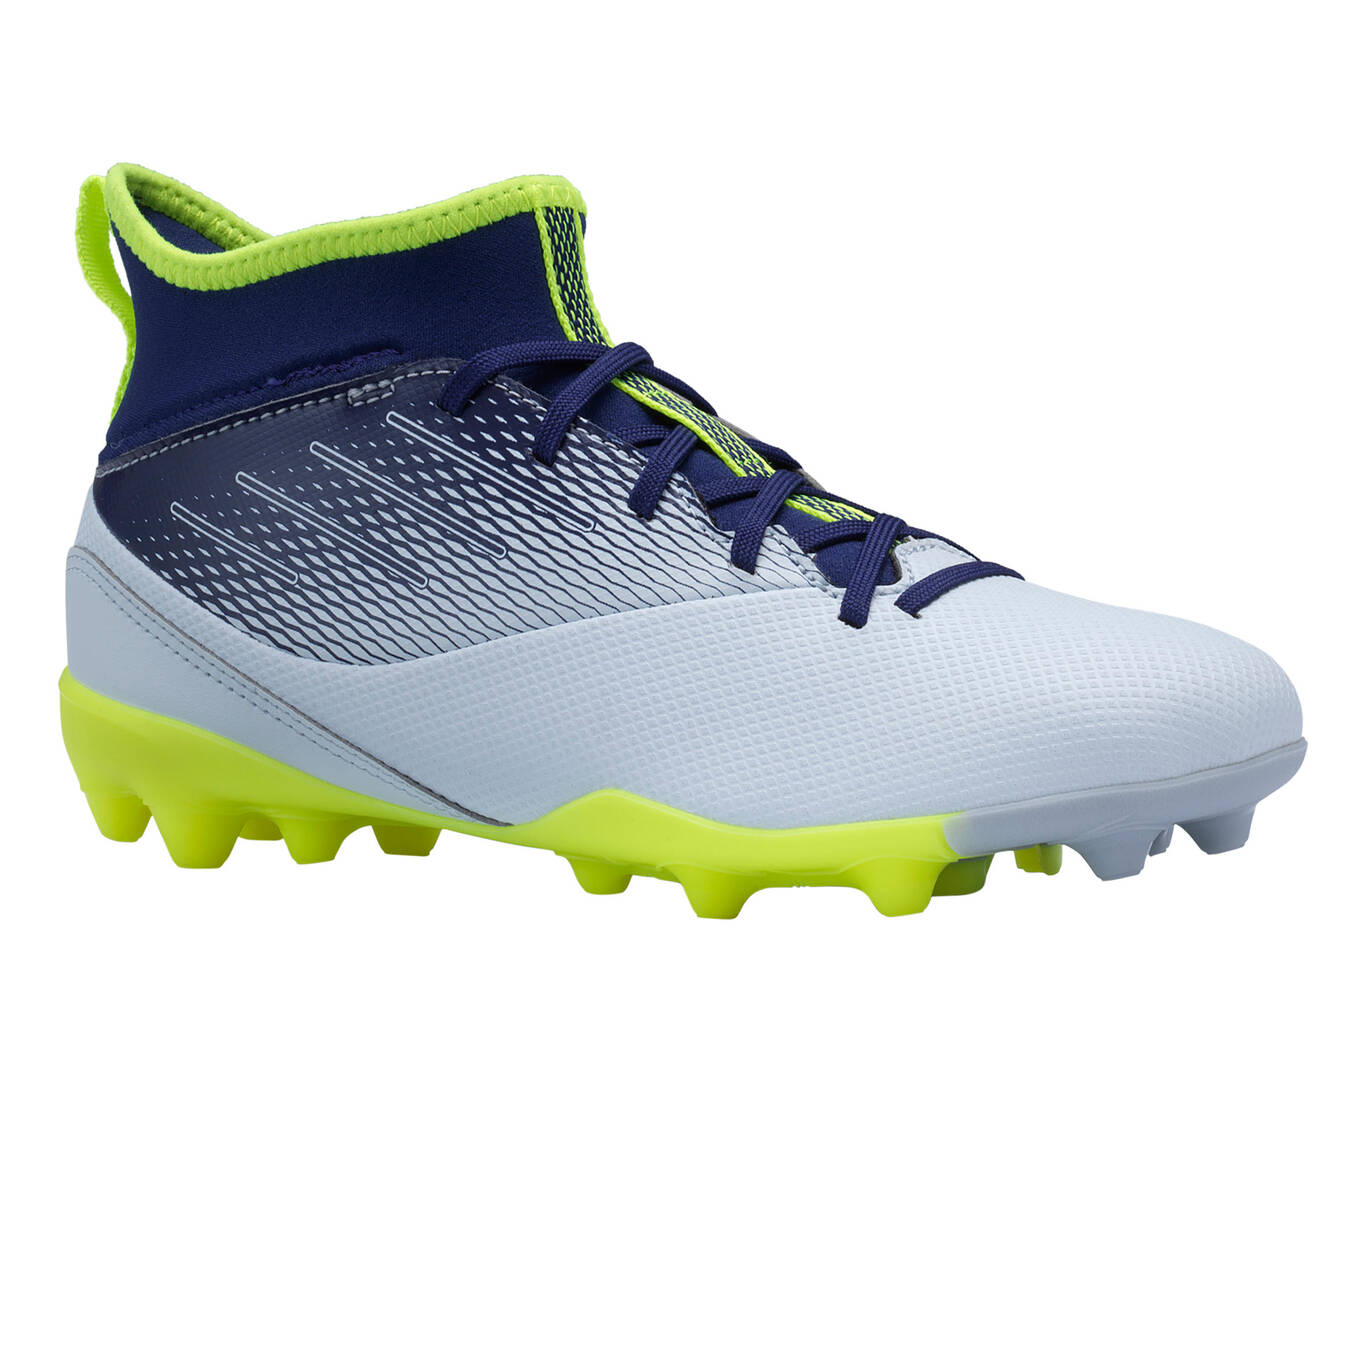 Agility 500 MG Kids' High-Top Football Boots - Grey/Blue